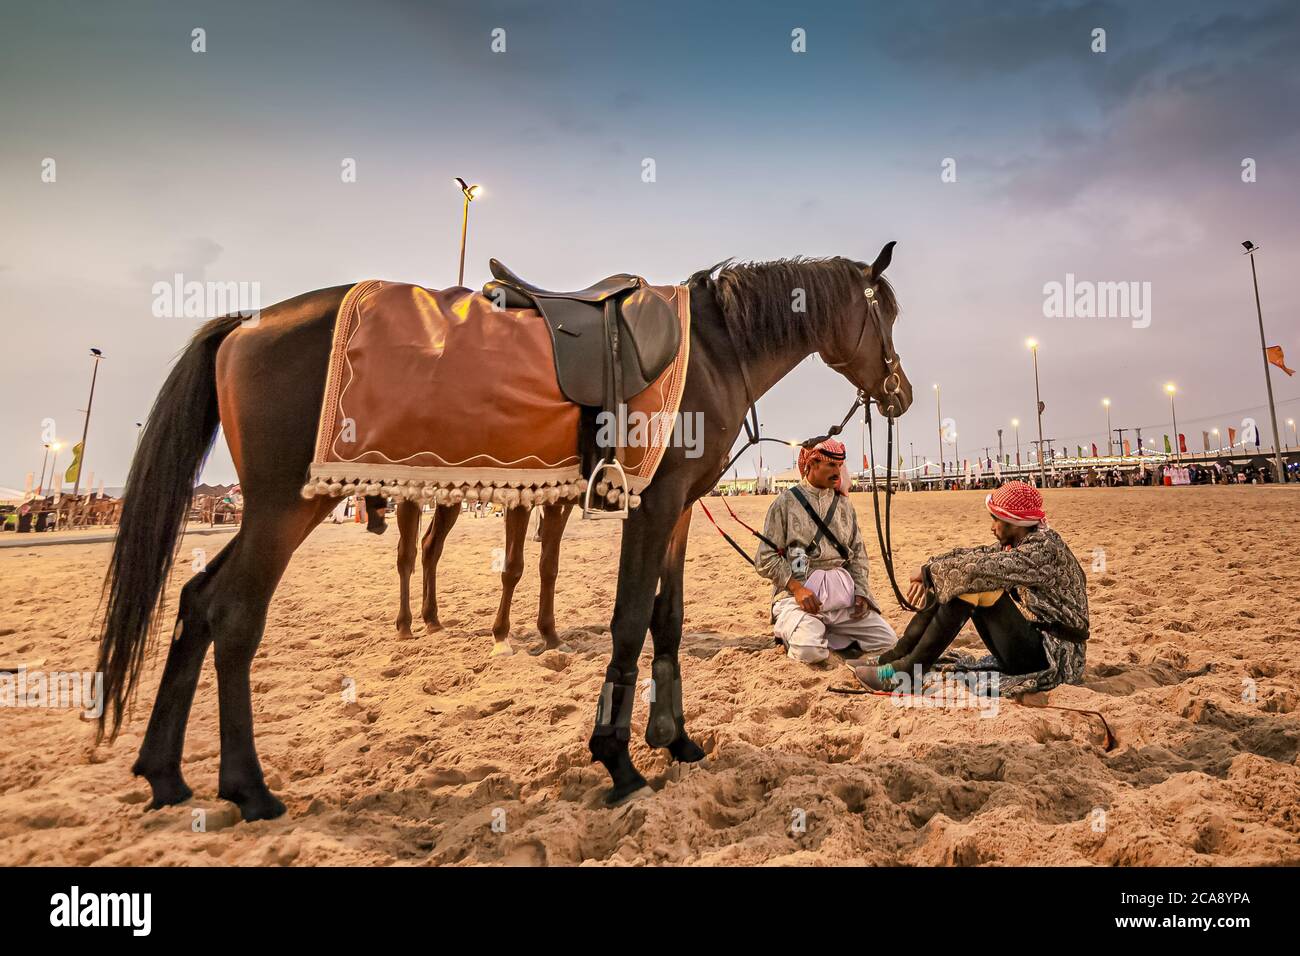 Horse and Saudi Horse rider on traditional desert safari festival on abqaiq Saudi Arabia. Stock Photo